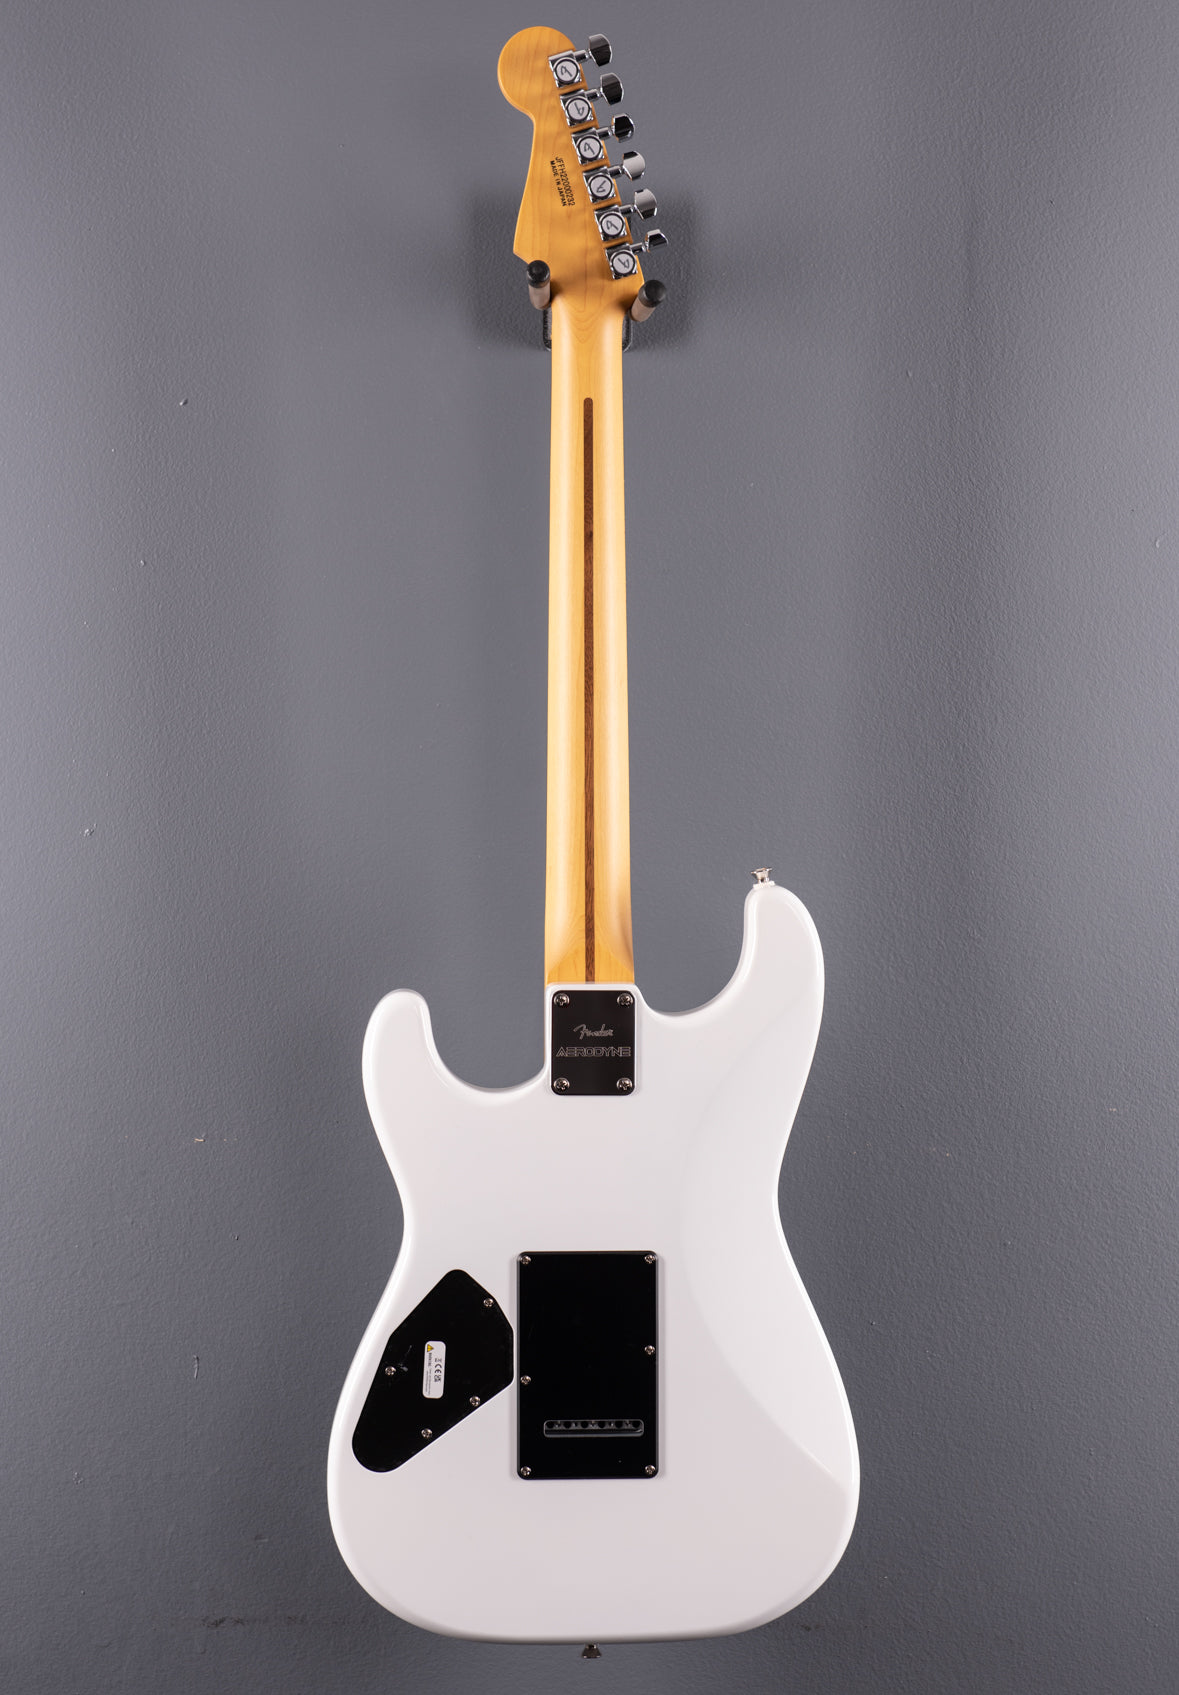 Aerodyne Special Stratocaster - Bright White